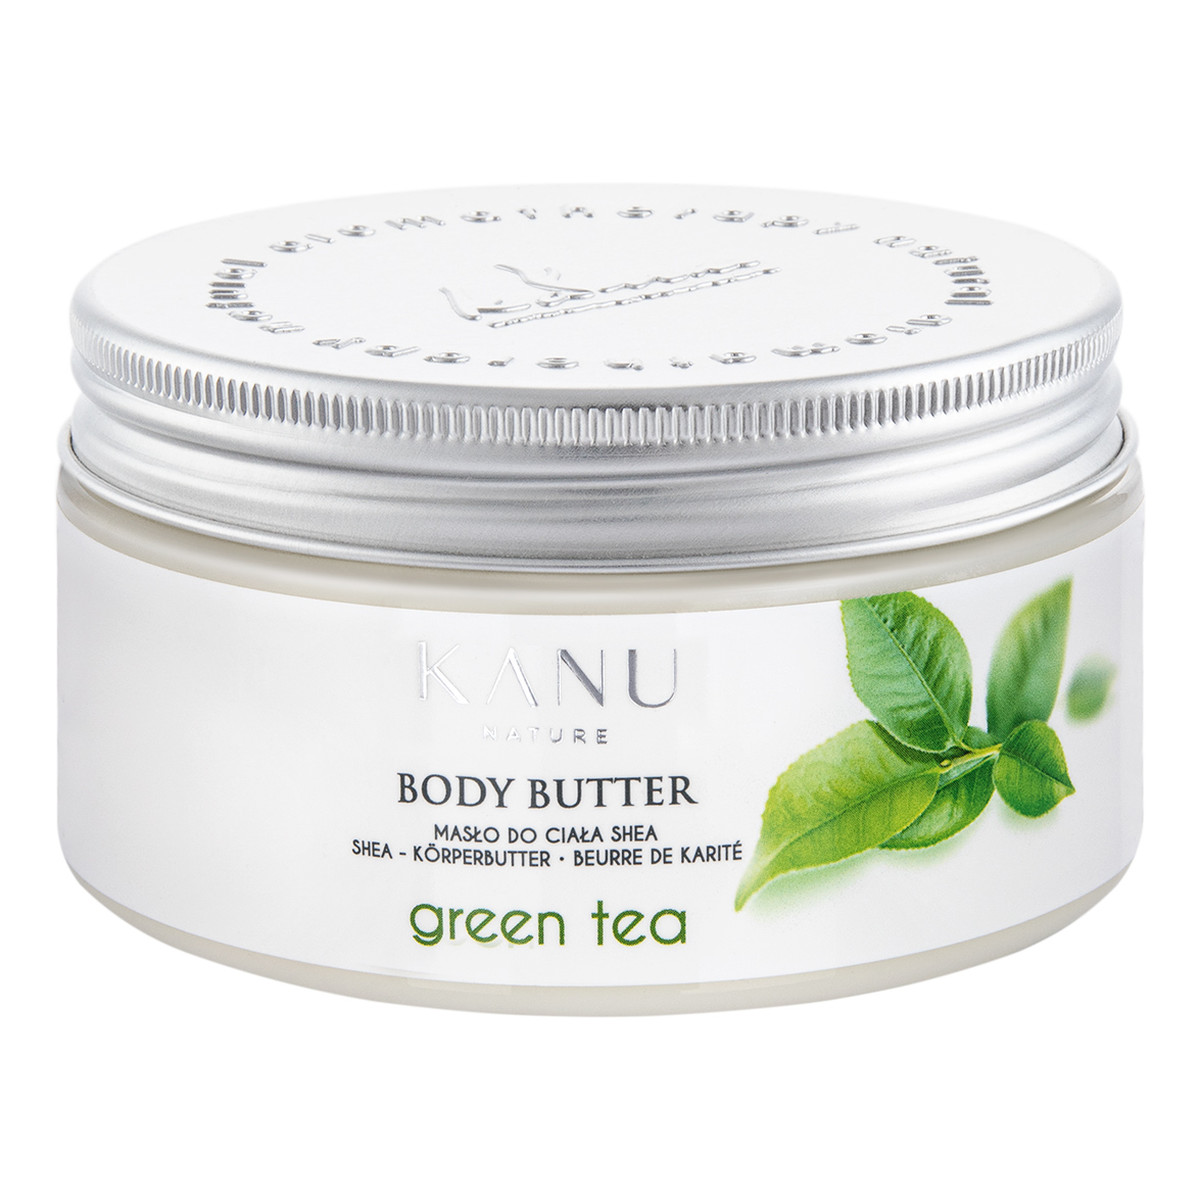 Kanu Nature Body butter masło do ciała zielona herbata 190g